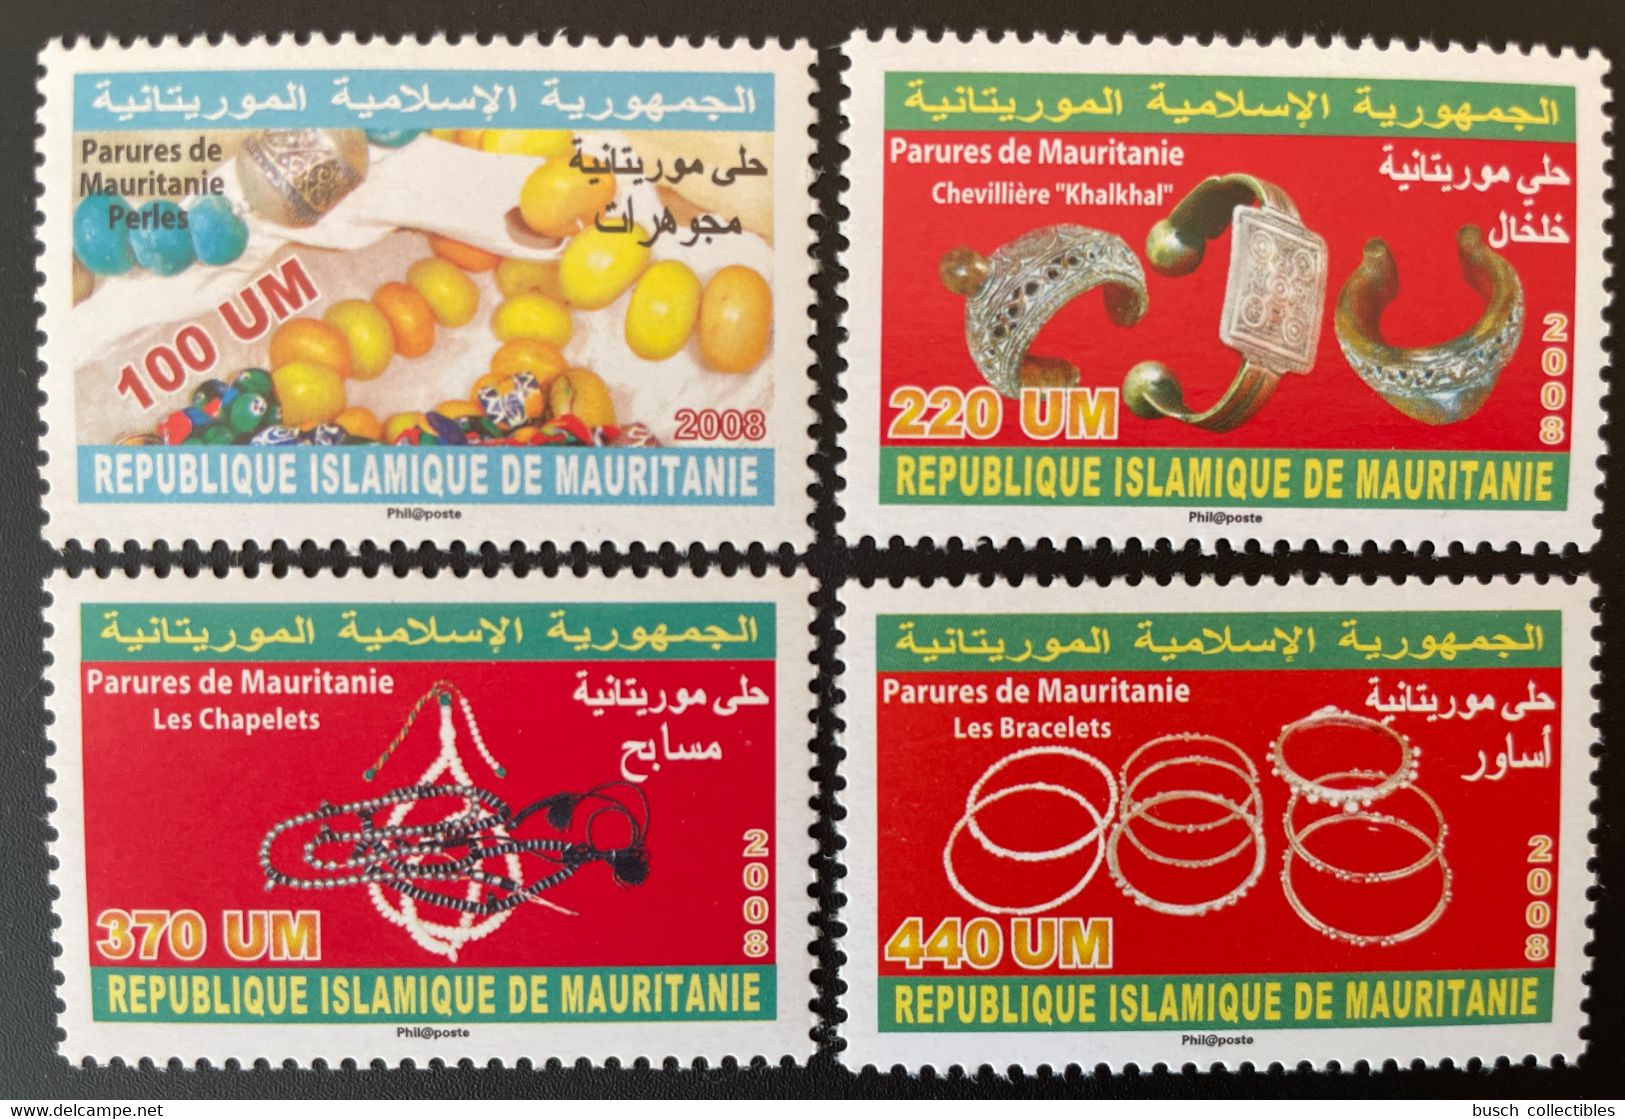 Mauritanie Mauretanien Mauritania 2008 Mi. 1157 - 1160 Parures Perles Bracelets Chapelets Bijoux Schmuck Jewels MNH ** - Mauretanien (1960-...)